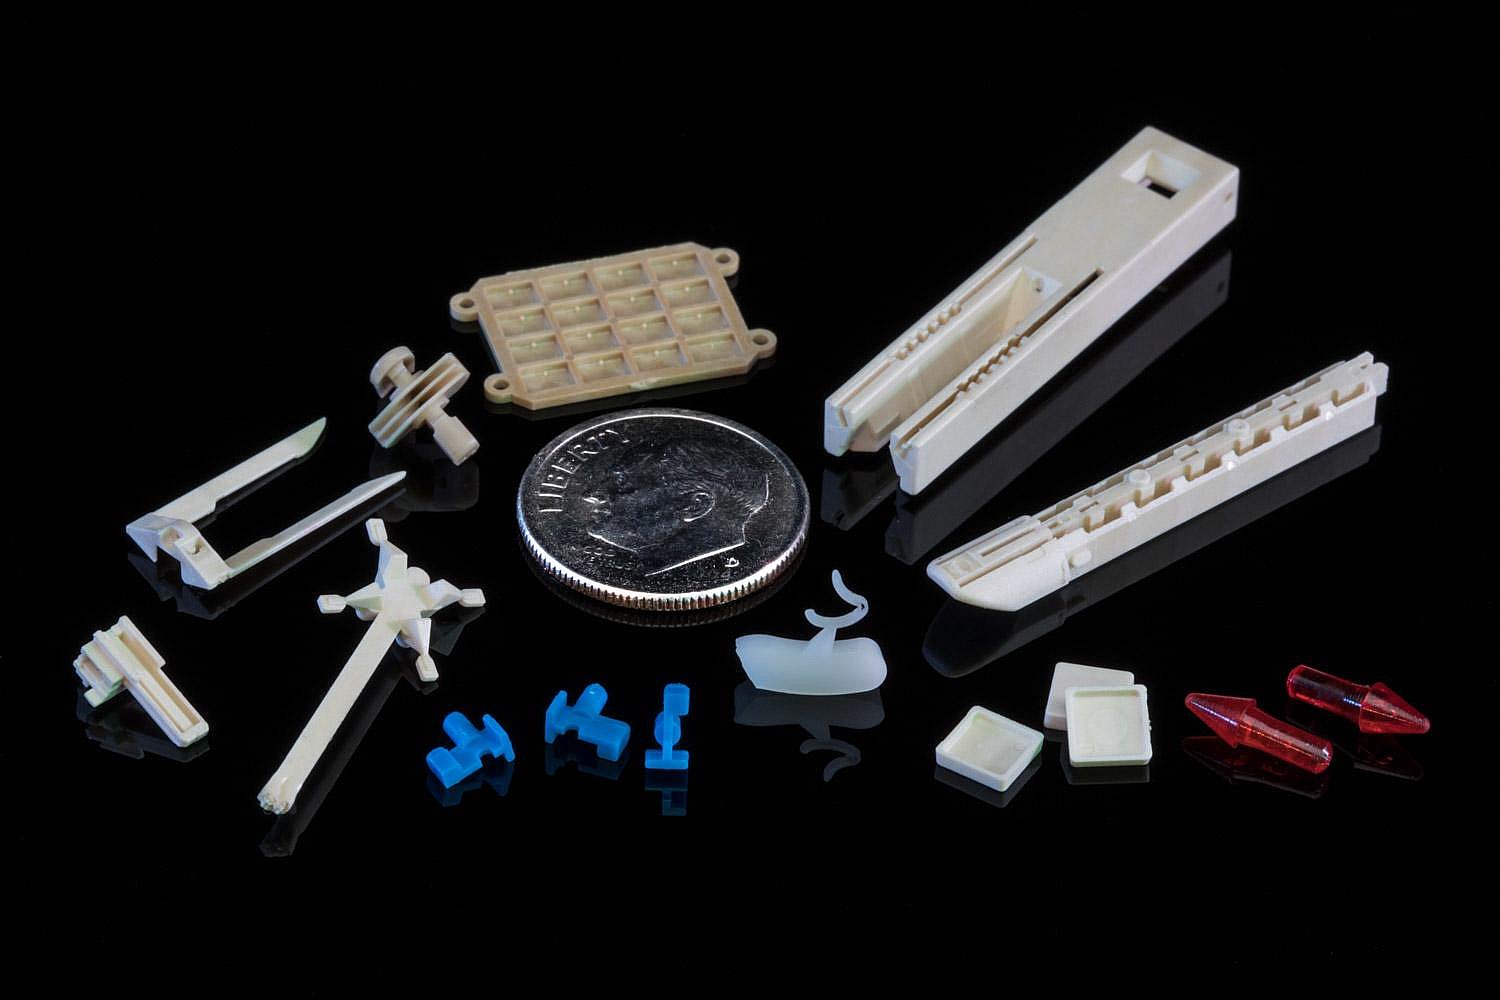 Miniature Components For Critical Applications - Molded Plastic Parts